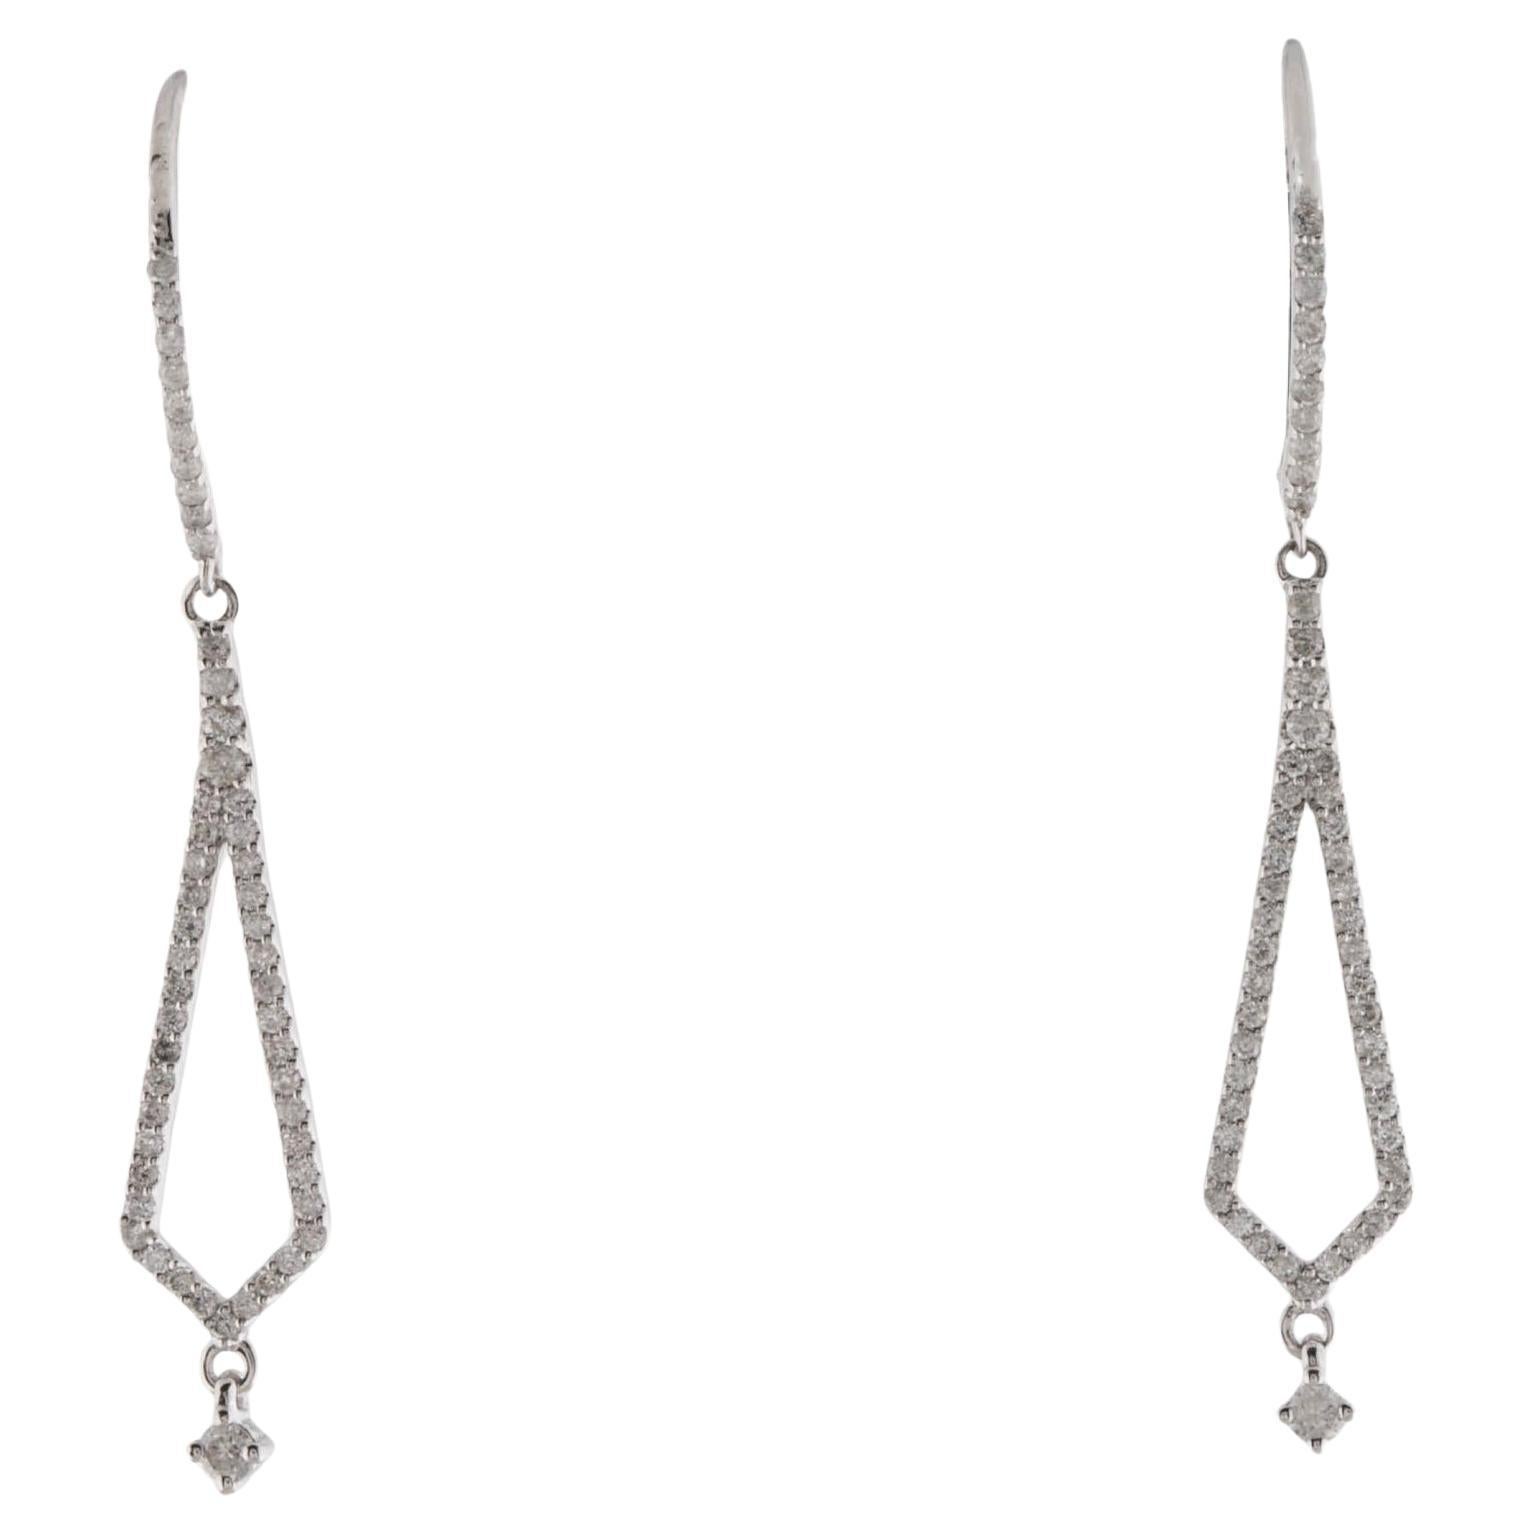 14K Diamond Drop Earrings - Exquisite Sparkle, Timeless Elegance, Elegant Design For Sale